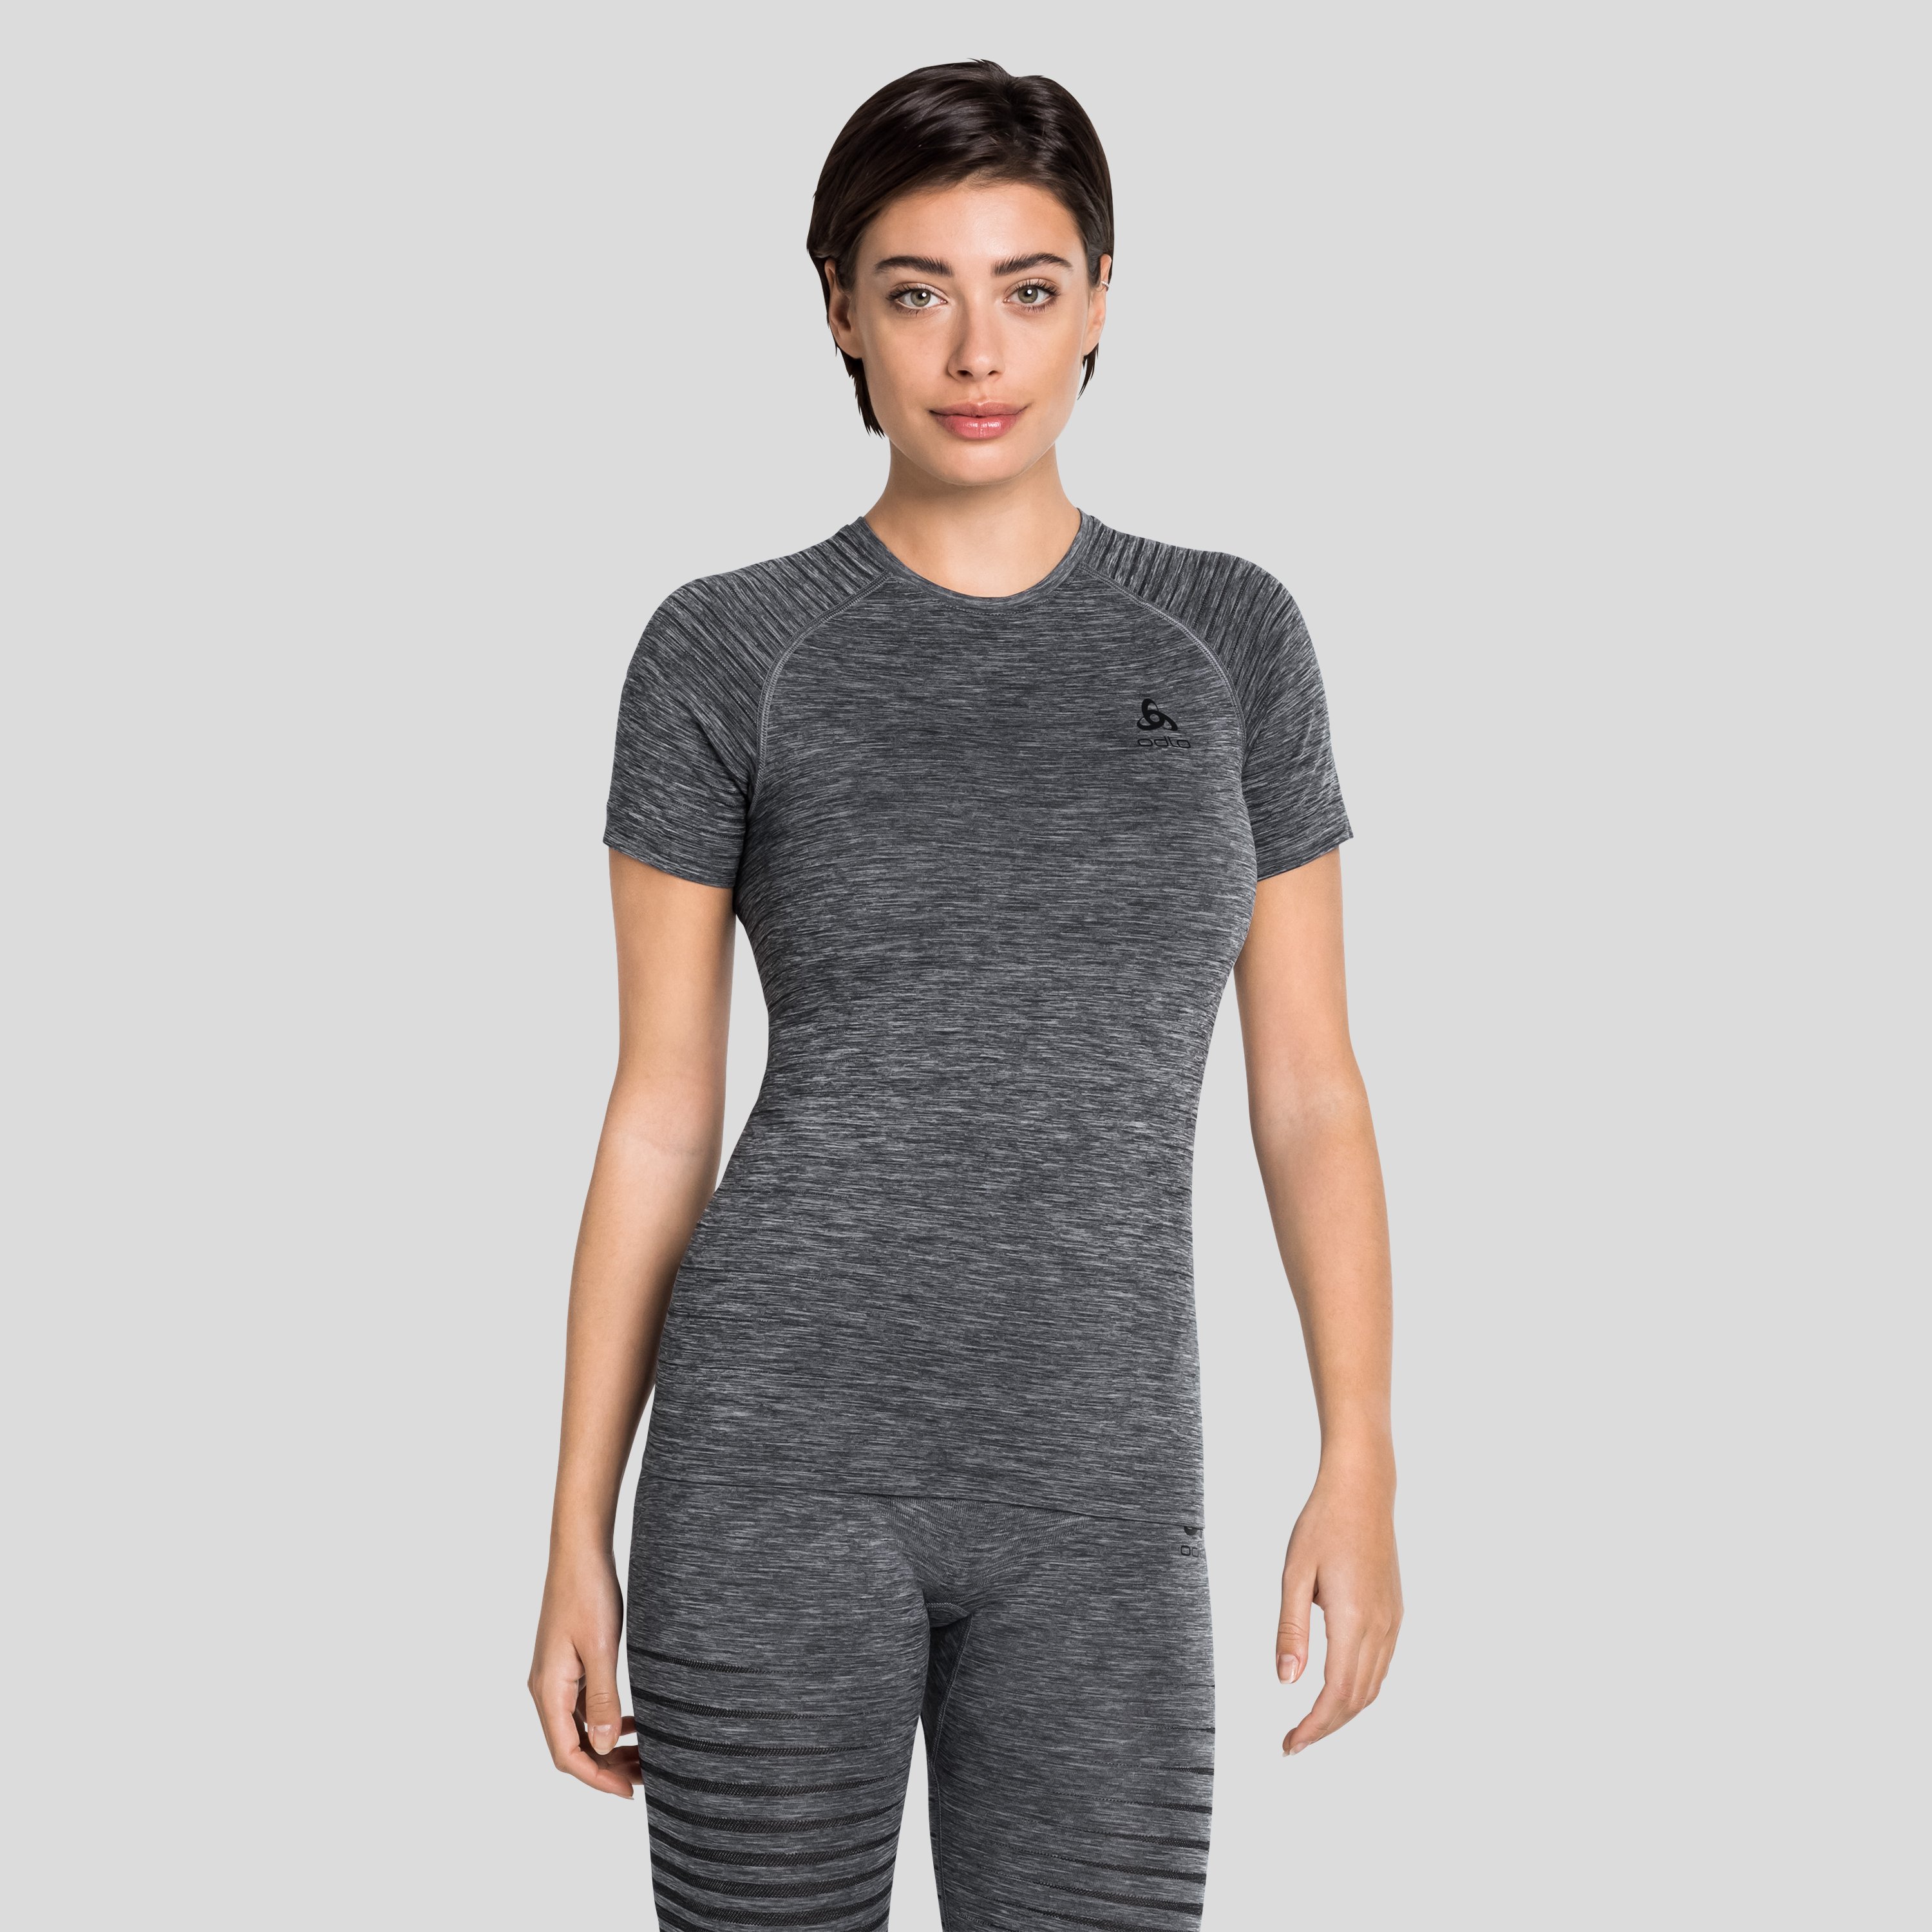 ODLO Performance Light Base Layer T-Shirt für Damen, XL, grau